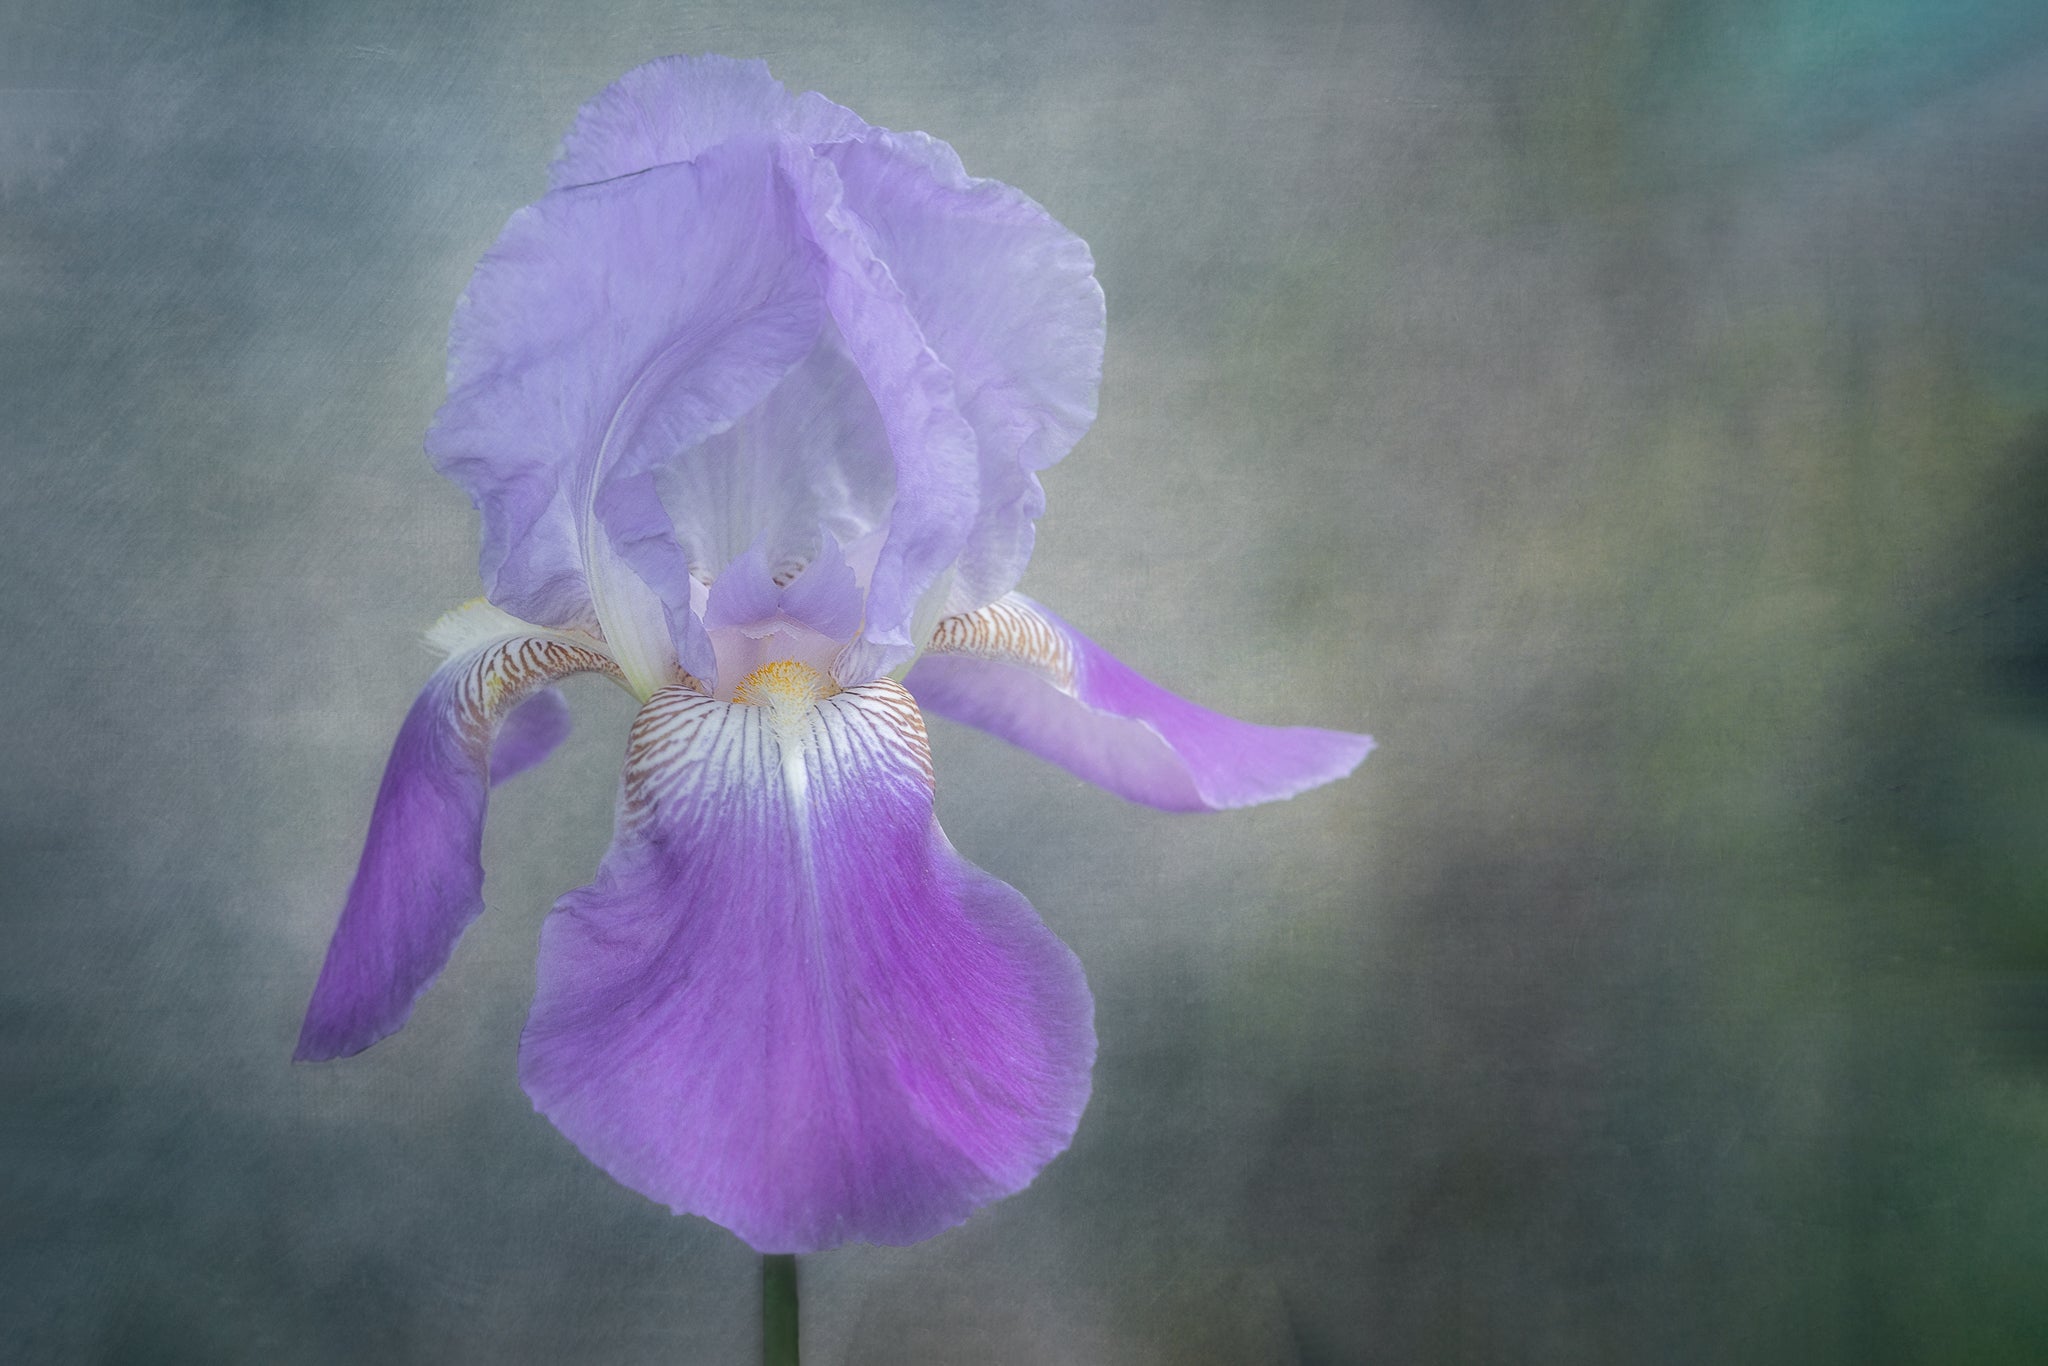 Fine art flower photograph of a purple Iris flower titled "Empowered" by Cameron Dreaux of Dreaux Fine Art.